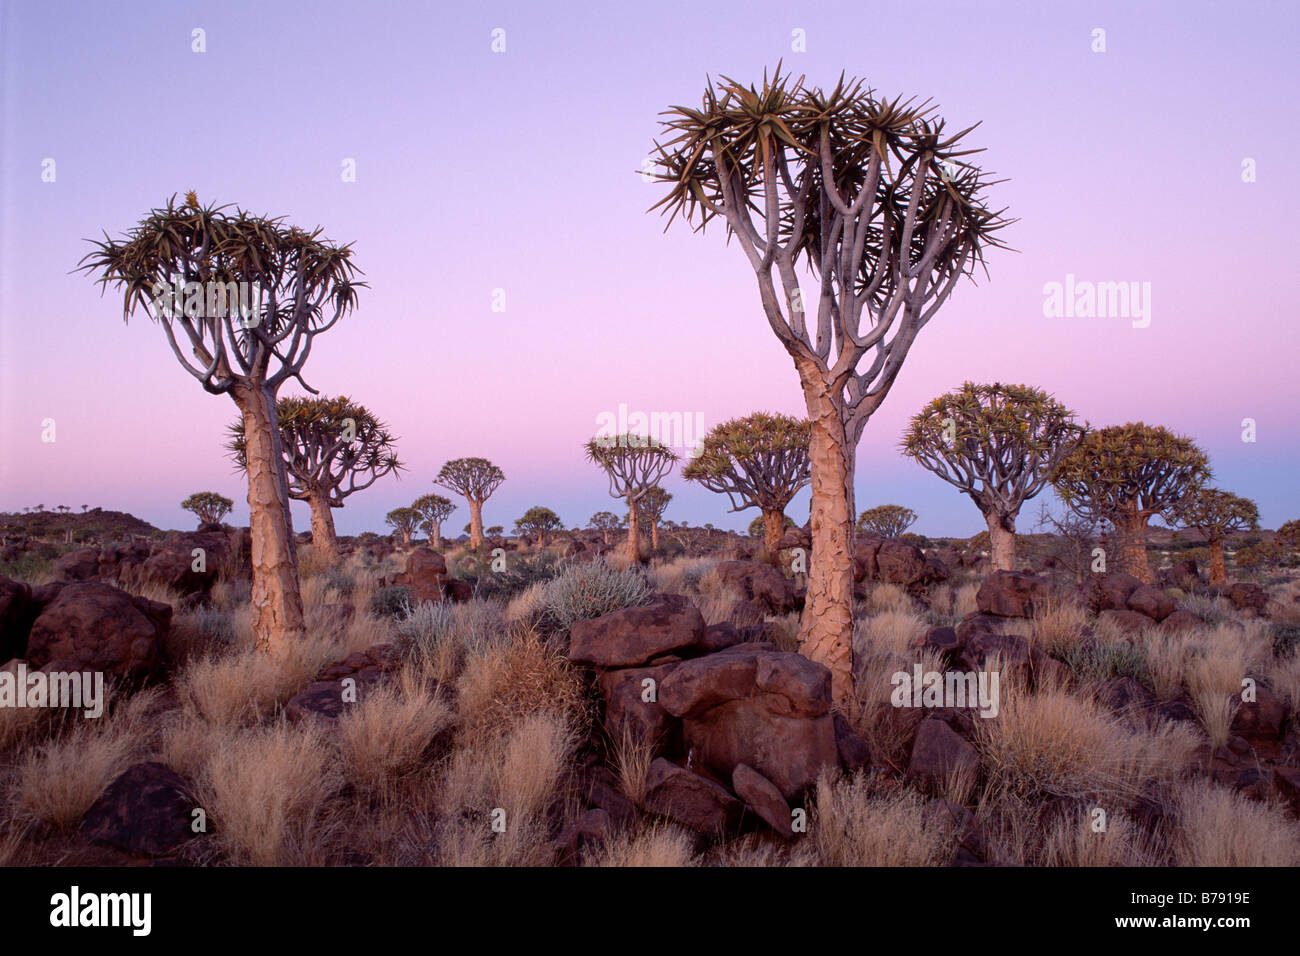 Quiver Tree or Kokerboom (Aloe dichtoma) at blue hour, Gariganus Farm, near Ketmannshoop, Namibia, Africa Stock Photo